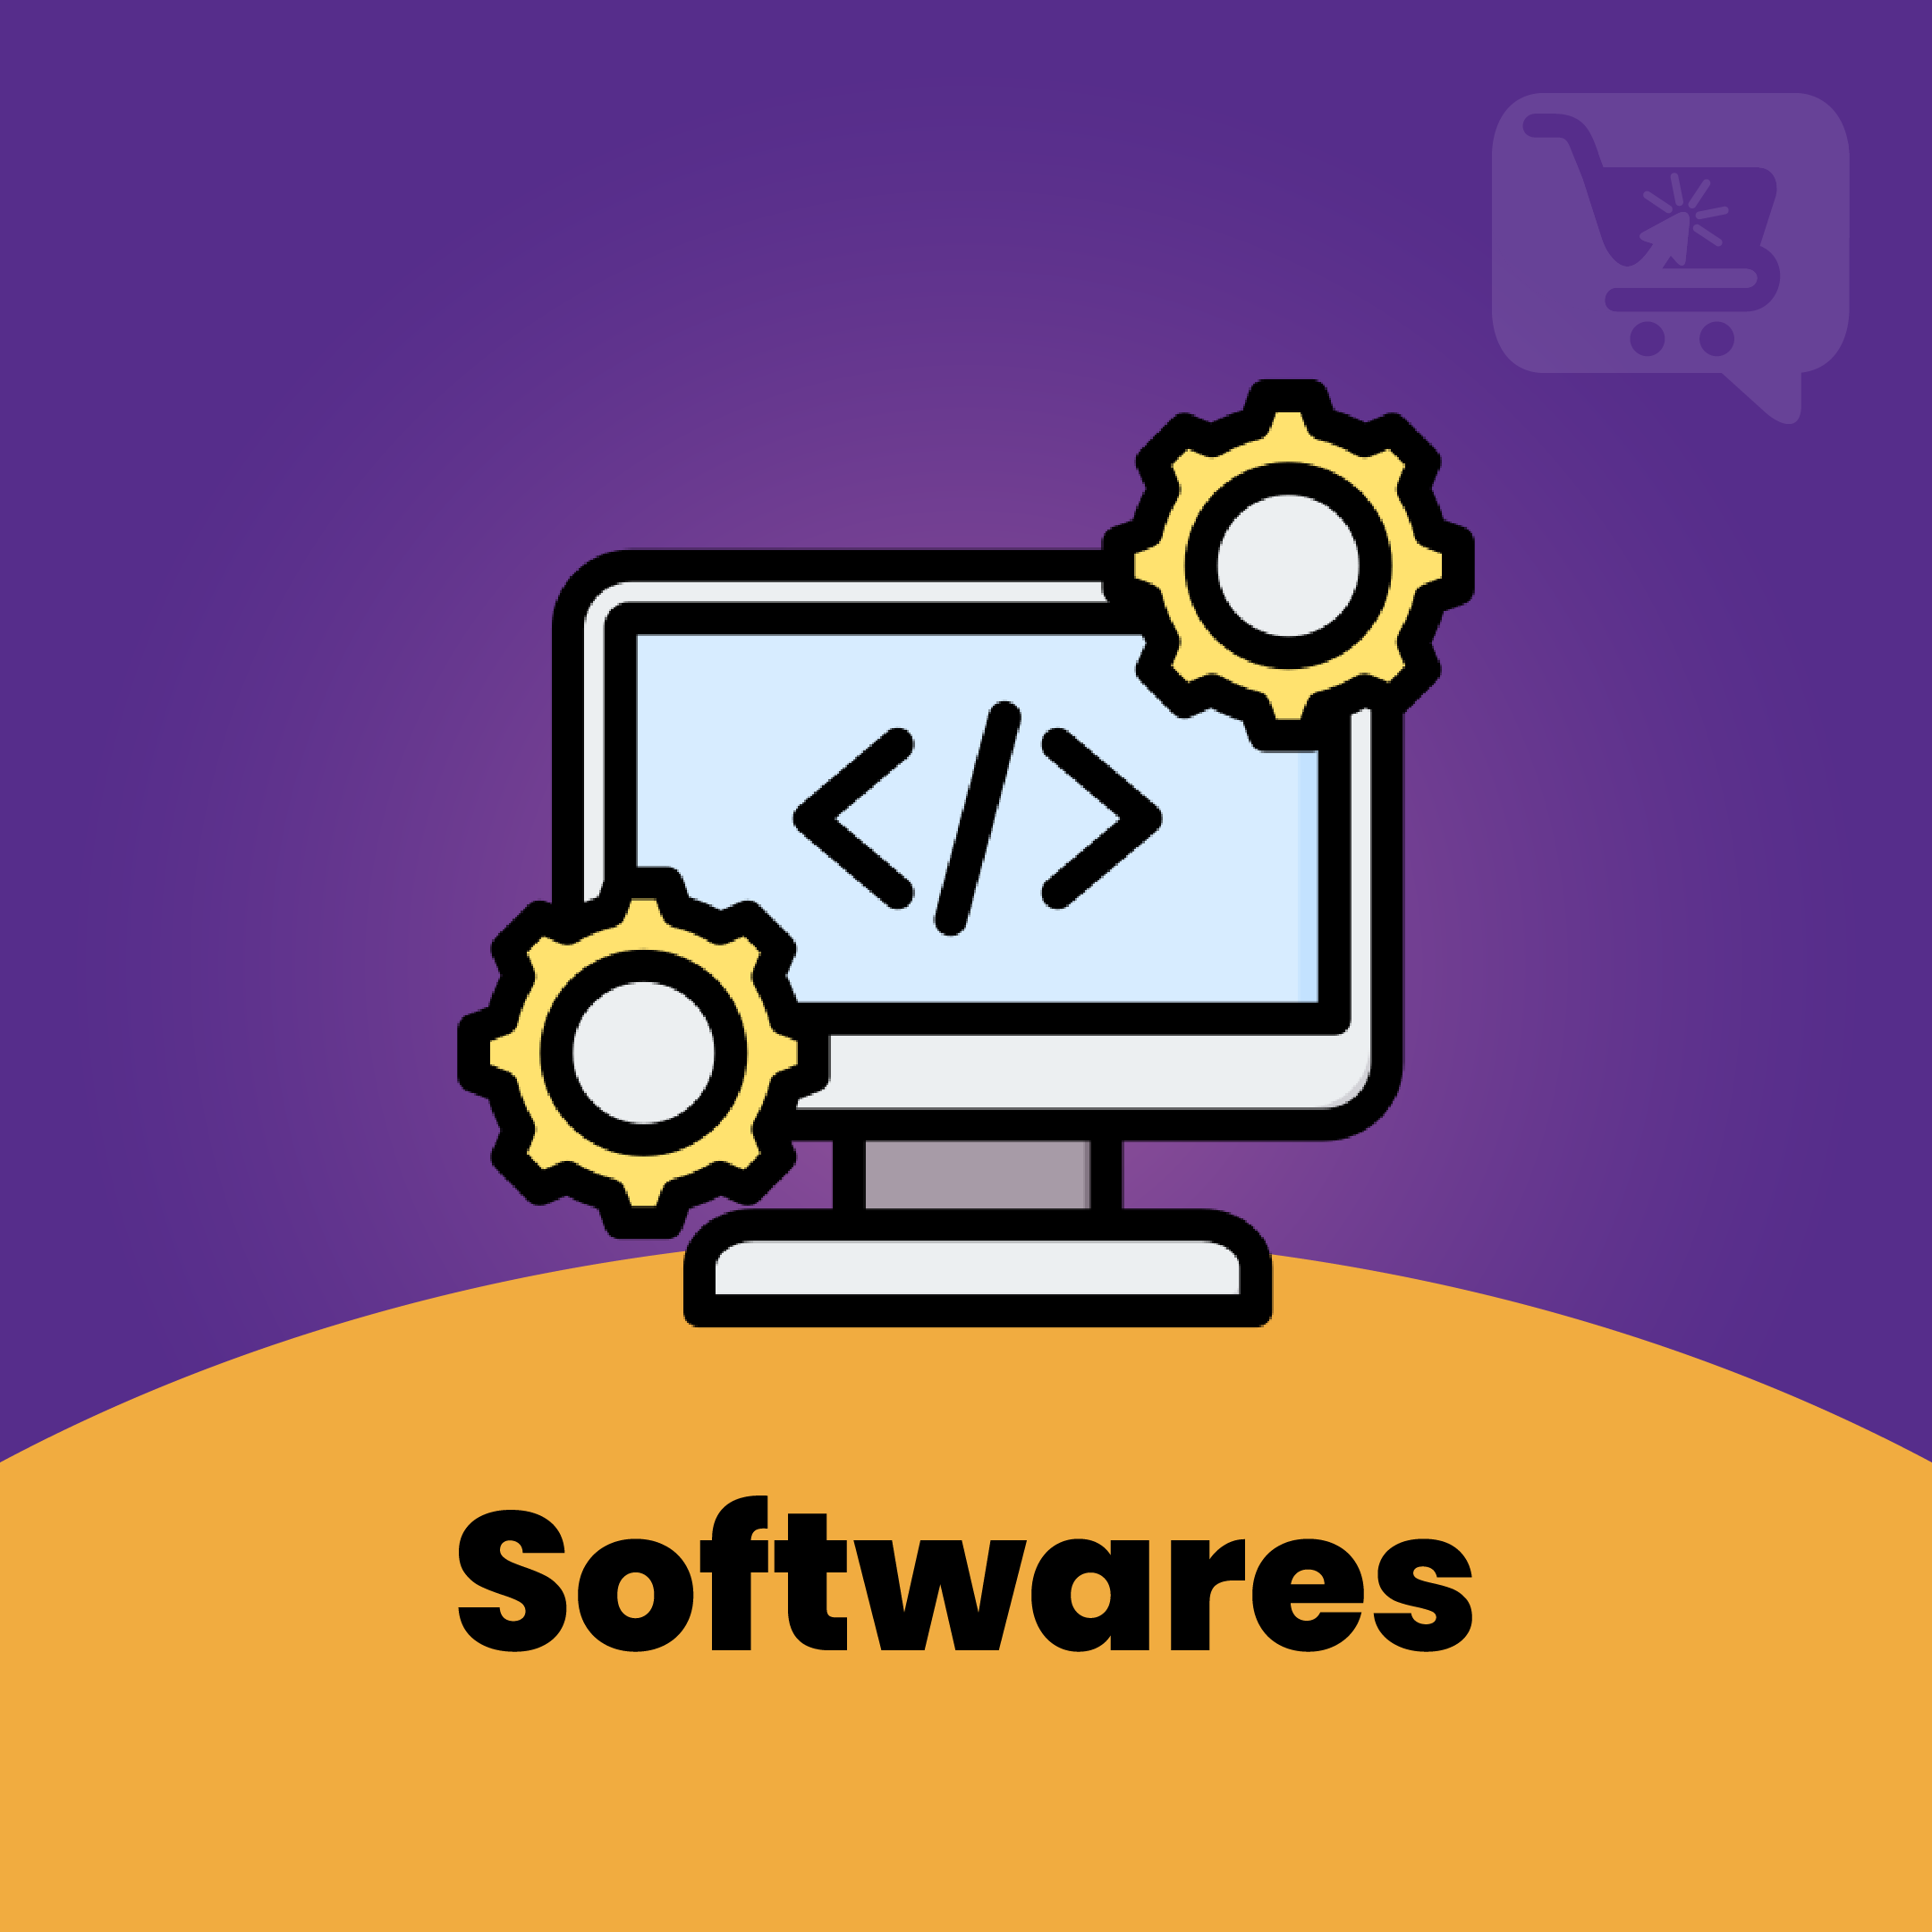 Softwares